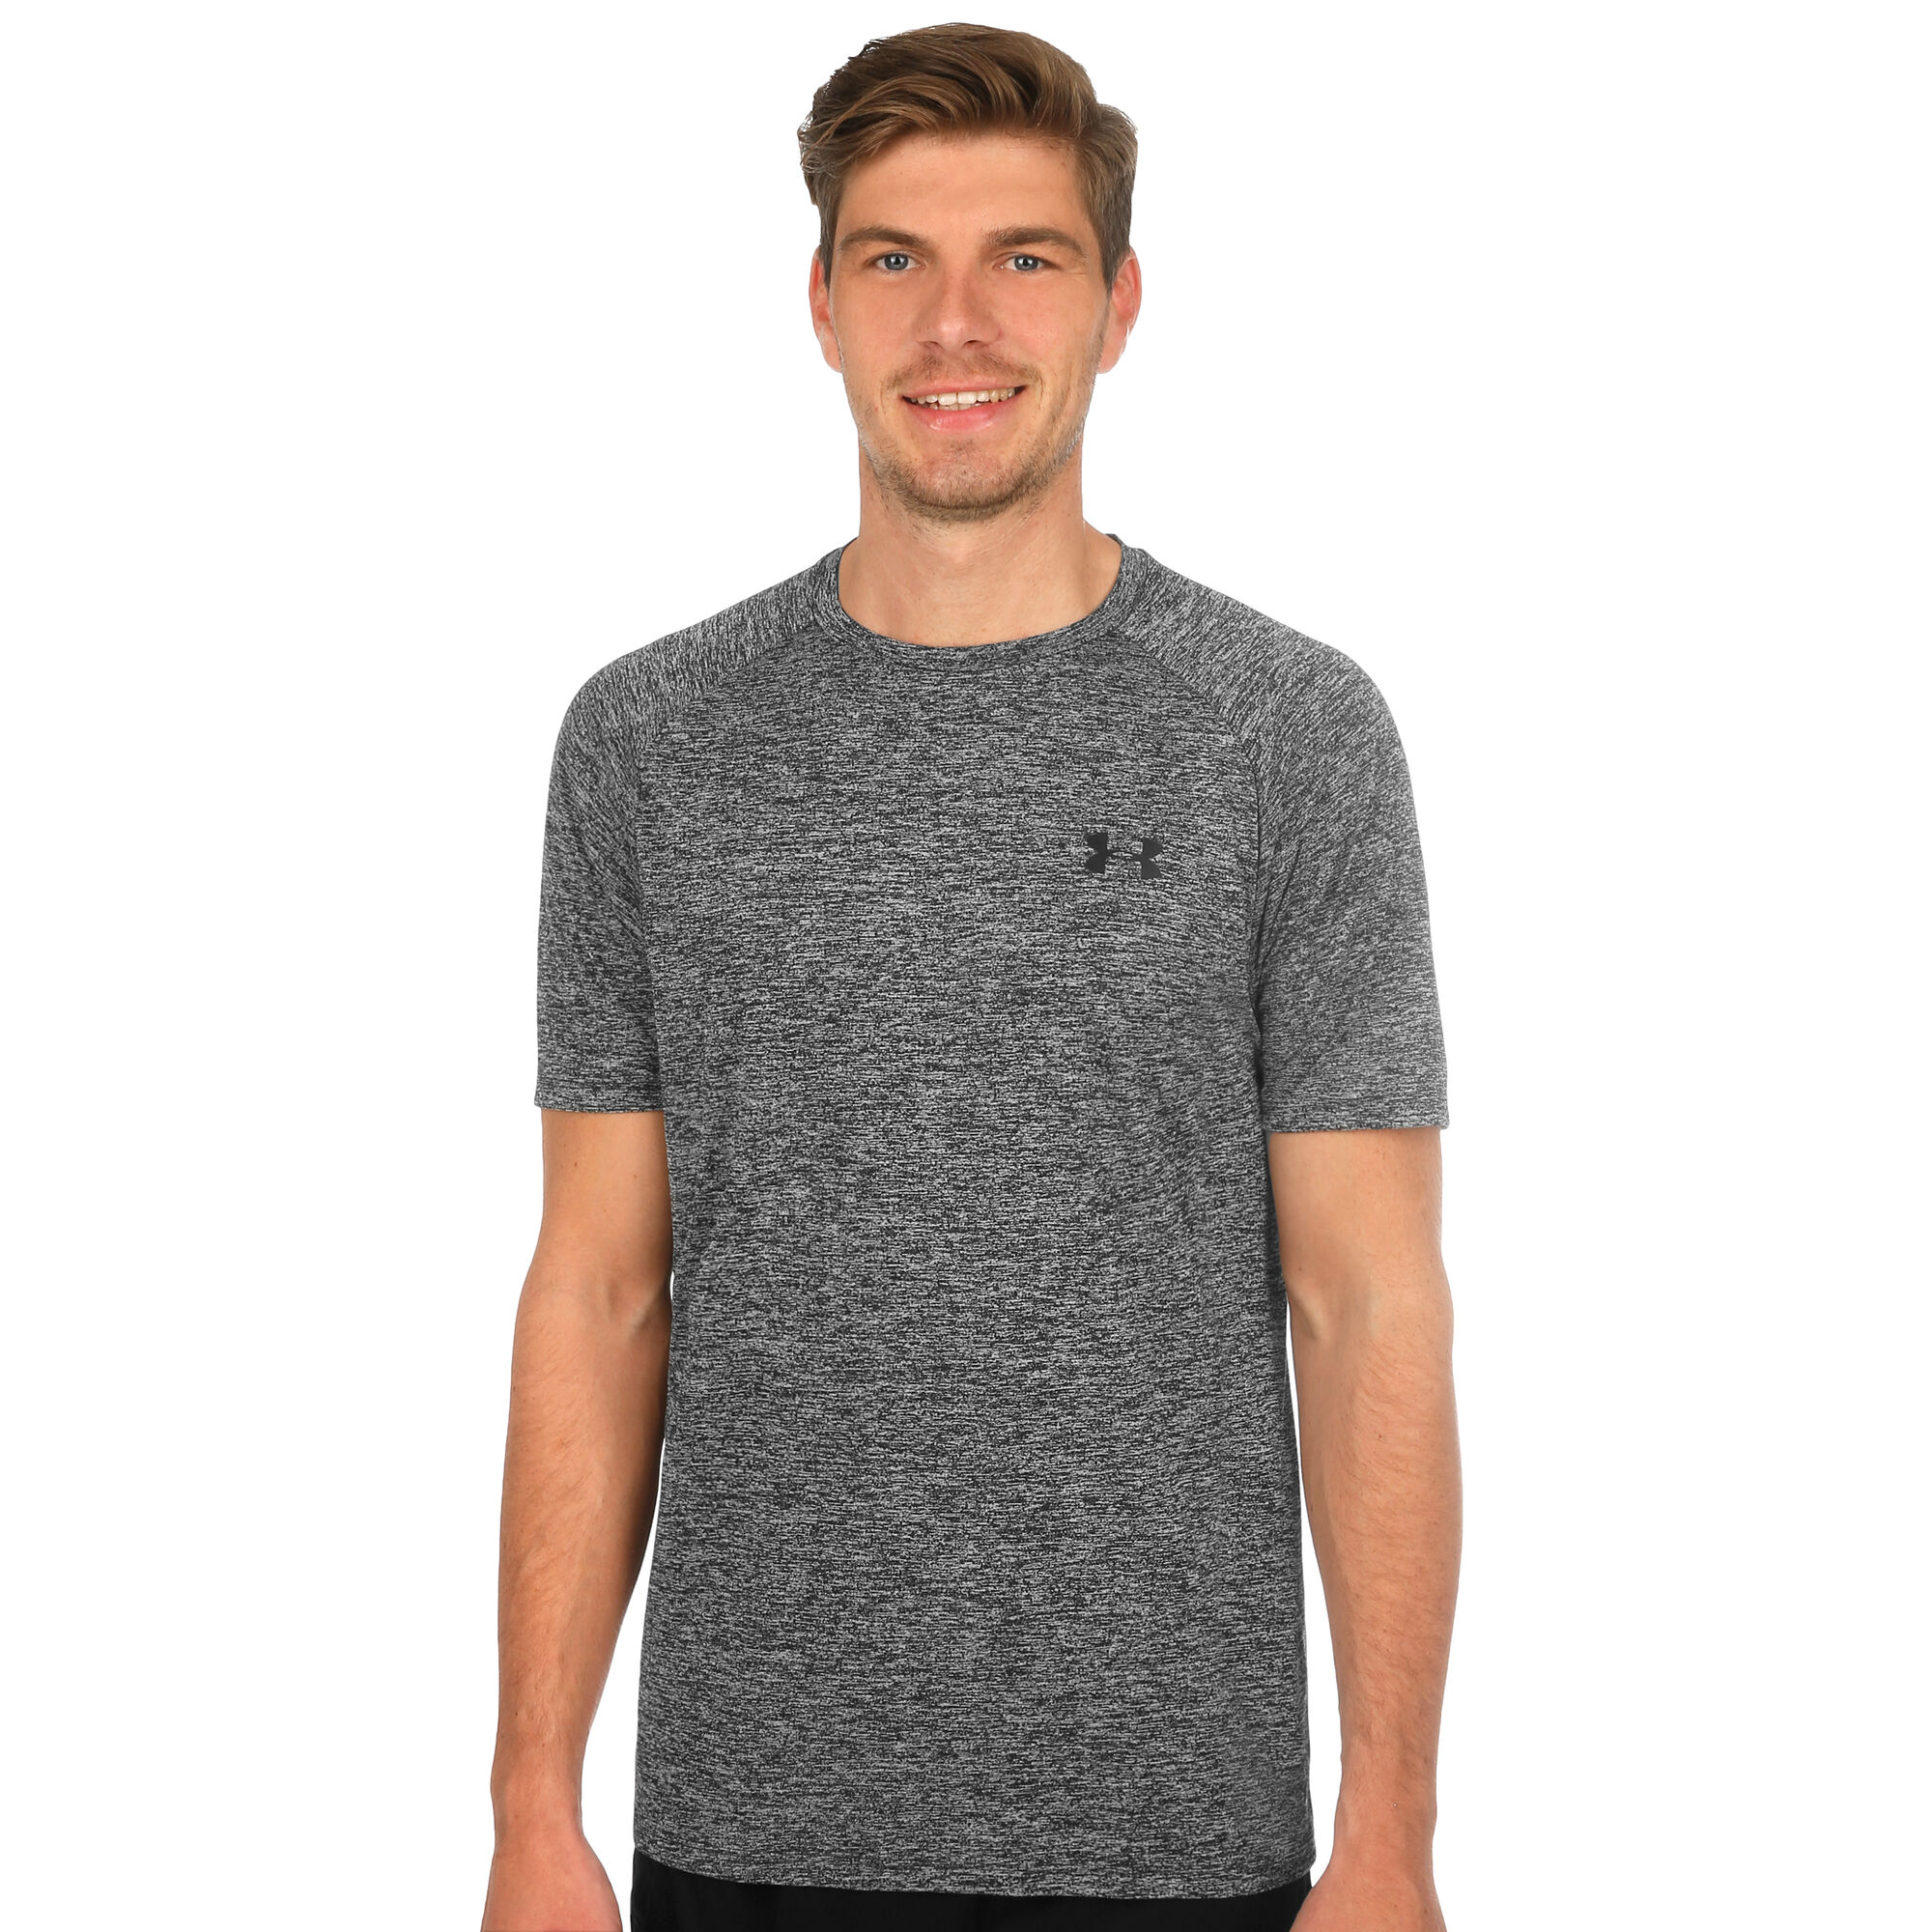 Buy Under Armour Tech 2.0 T-Shirt Men Grey, Black online | Tennis Point COM